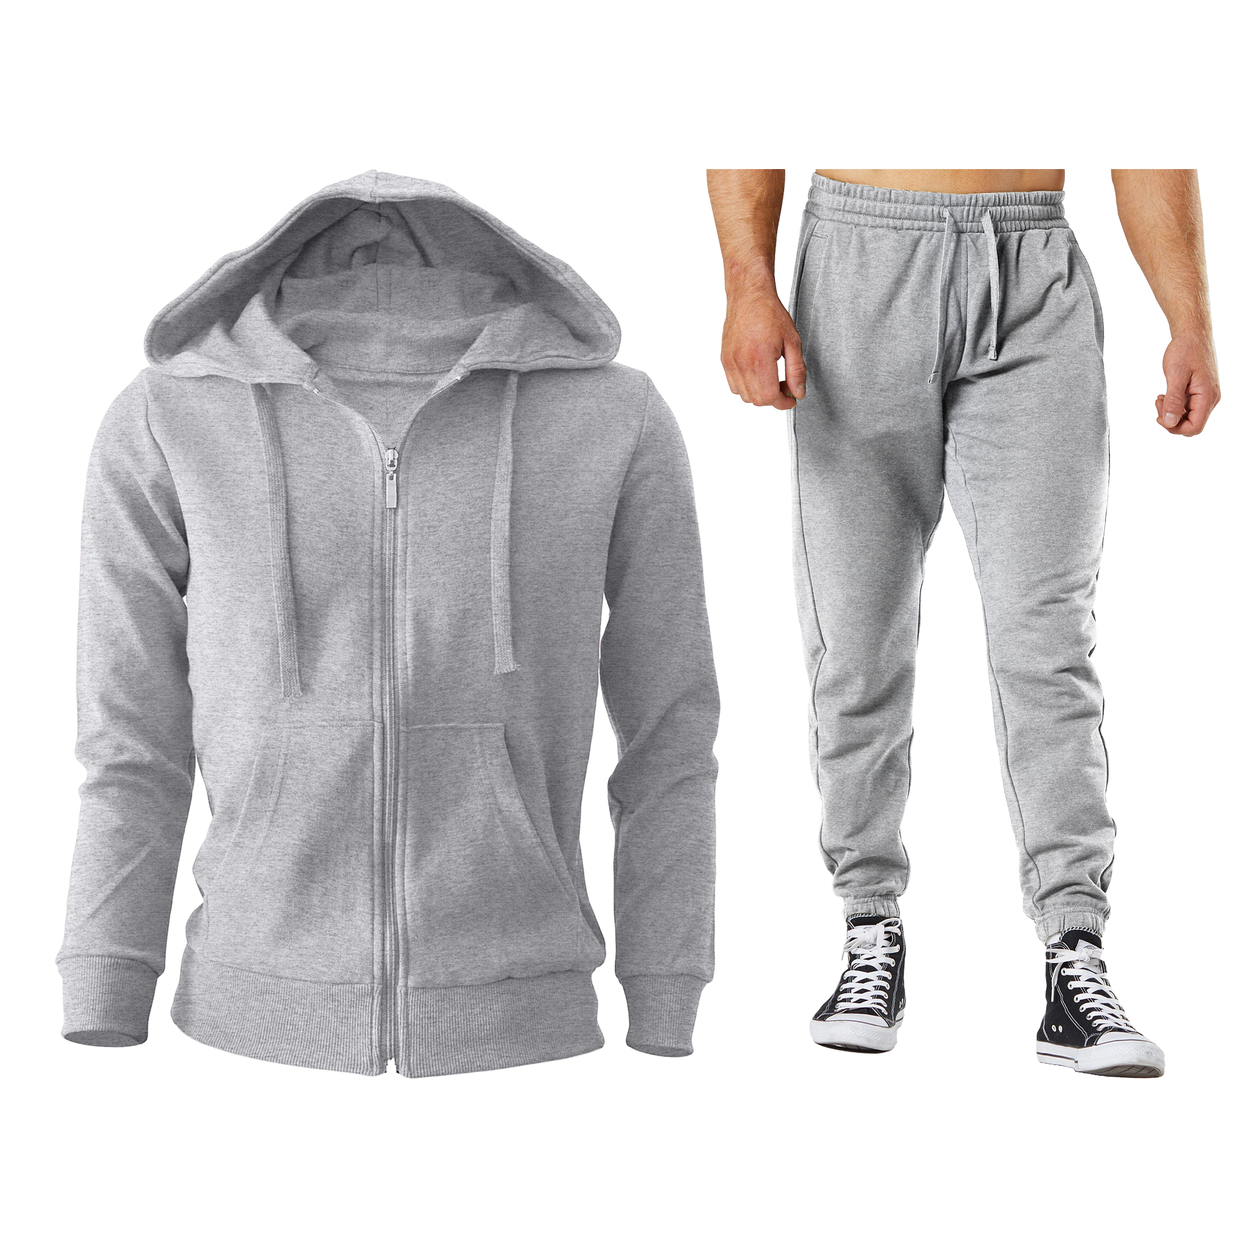 2/4-Piece: Men's Winter Warm Cozy Athletic Multi-Pockets BIG & TALL Sweatsuit Set - Grey, 2, X-large